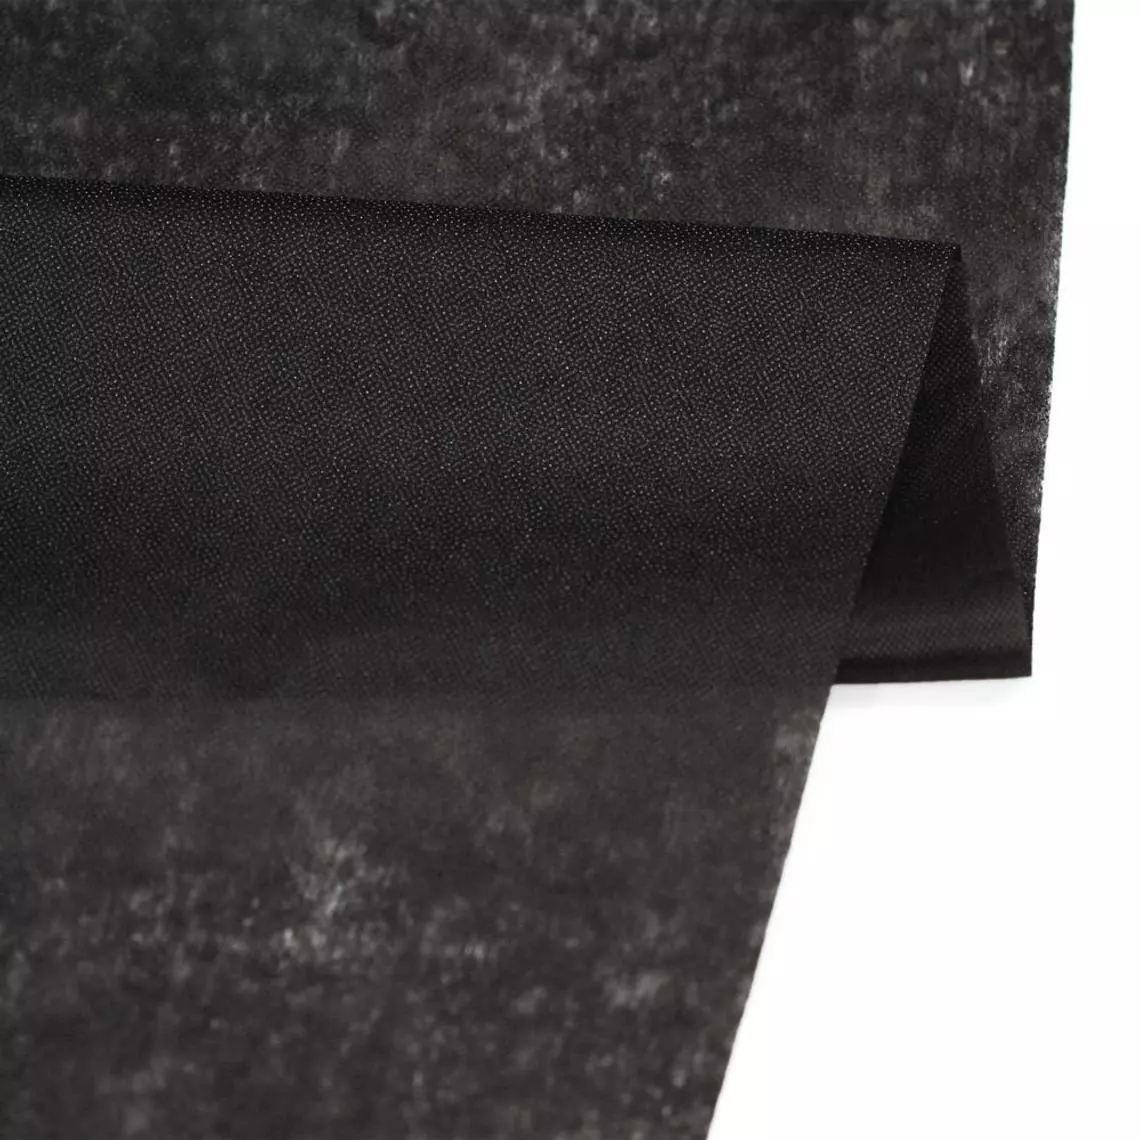  Black Single-Faced Knit Fusible Interfacing 60 Wide Lightweight  Fusible Interfacing Fabric by The Yard